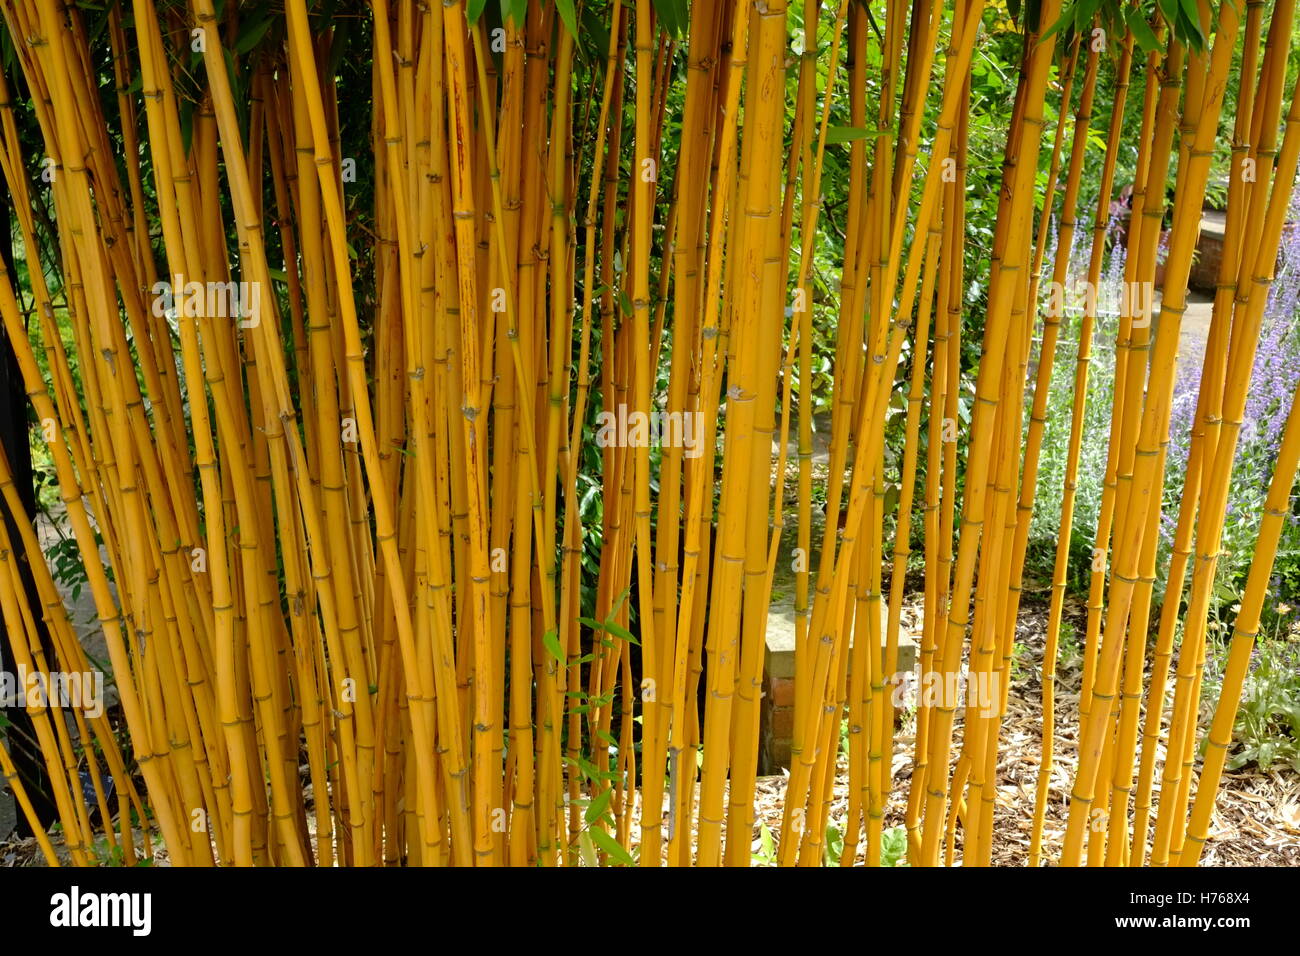 Bamboo stalks Stock Photo